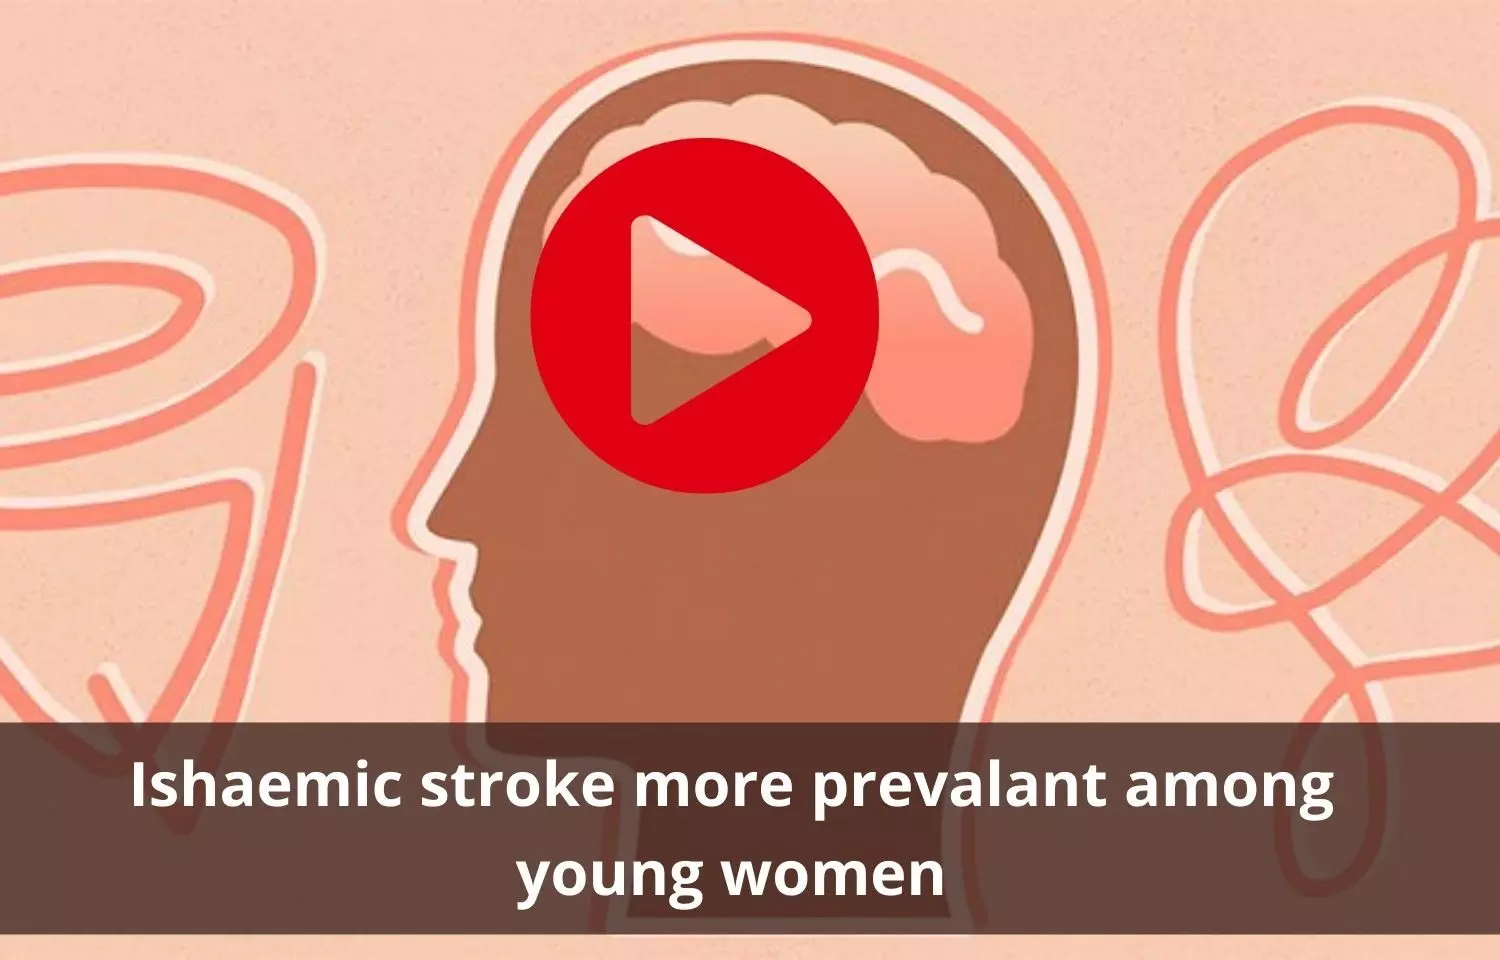 Ischemic stroke more prevalent in young women than men